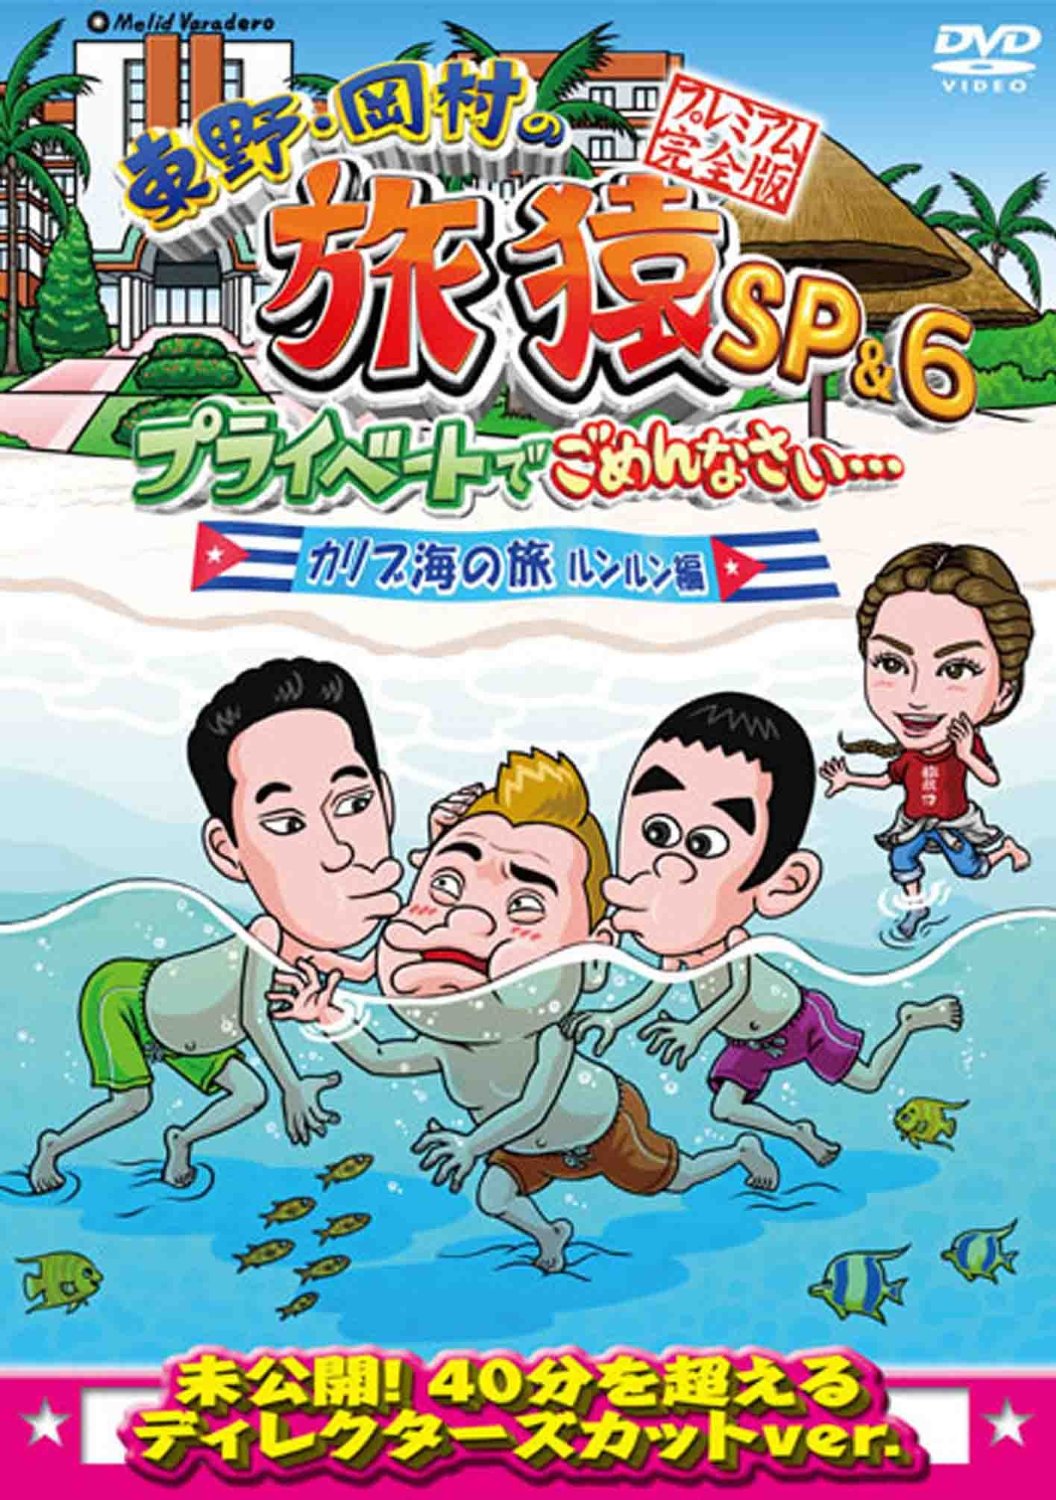 [DVD] 東野・岡村の旅猿SP&6 プライベートでごめんなさい・・・カリブ海の旅(3) ルンルン編